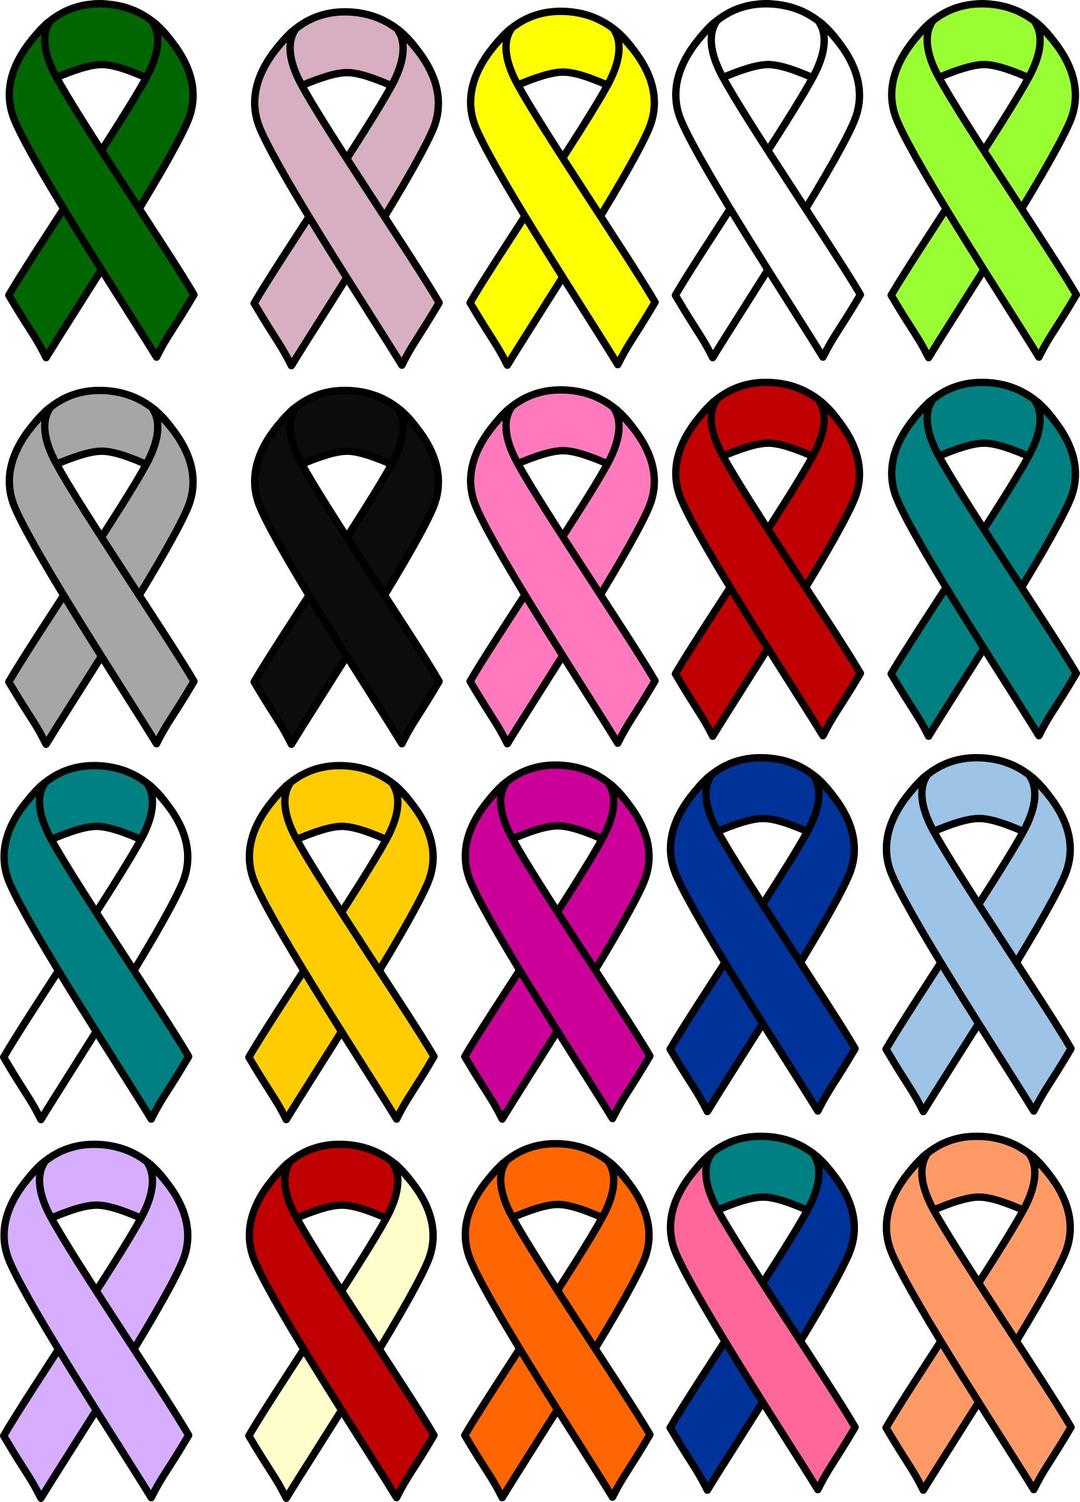 Cancer Ribbons png transparent